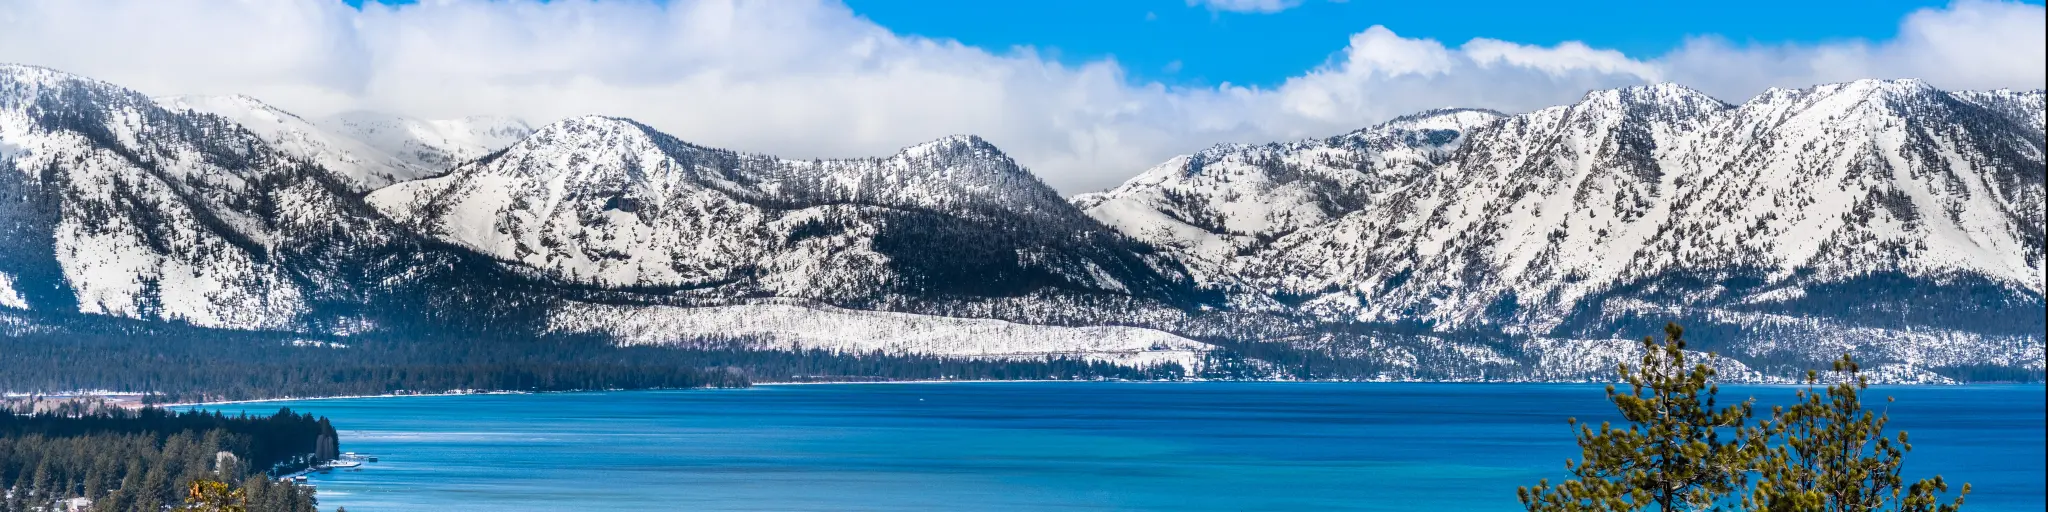 Snow capped Sierra Nevada Mountains behind Lake Tahoe, California